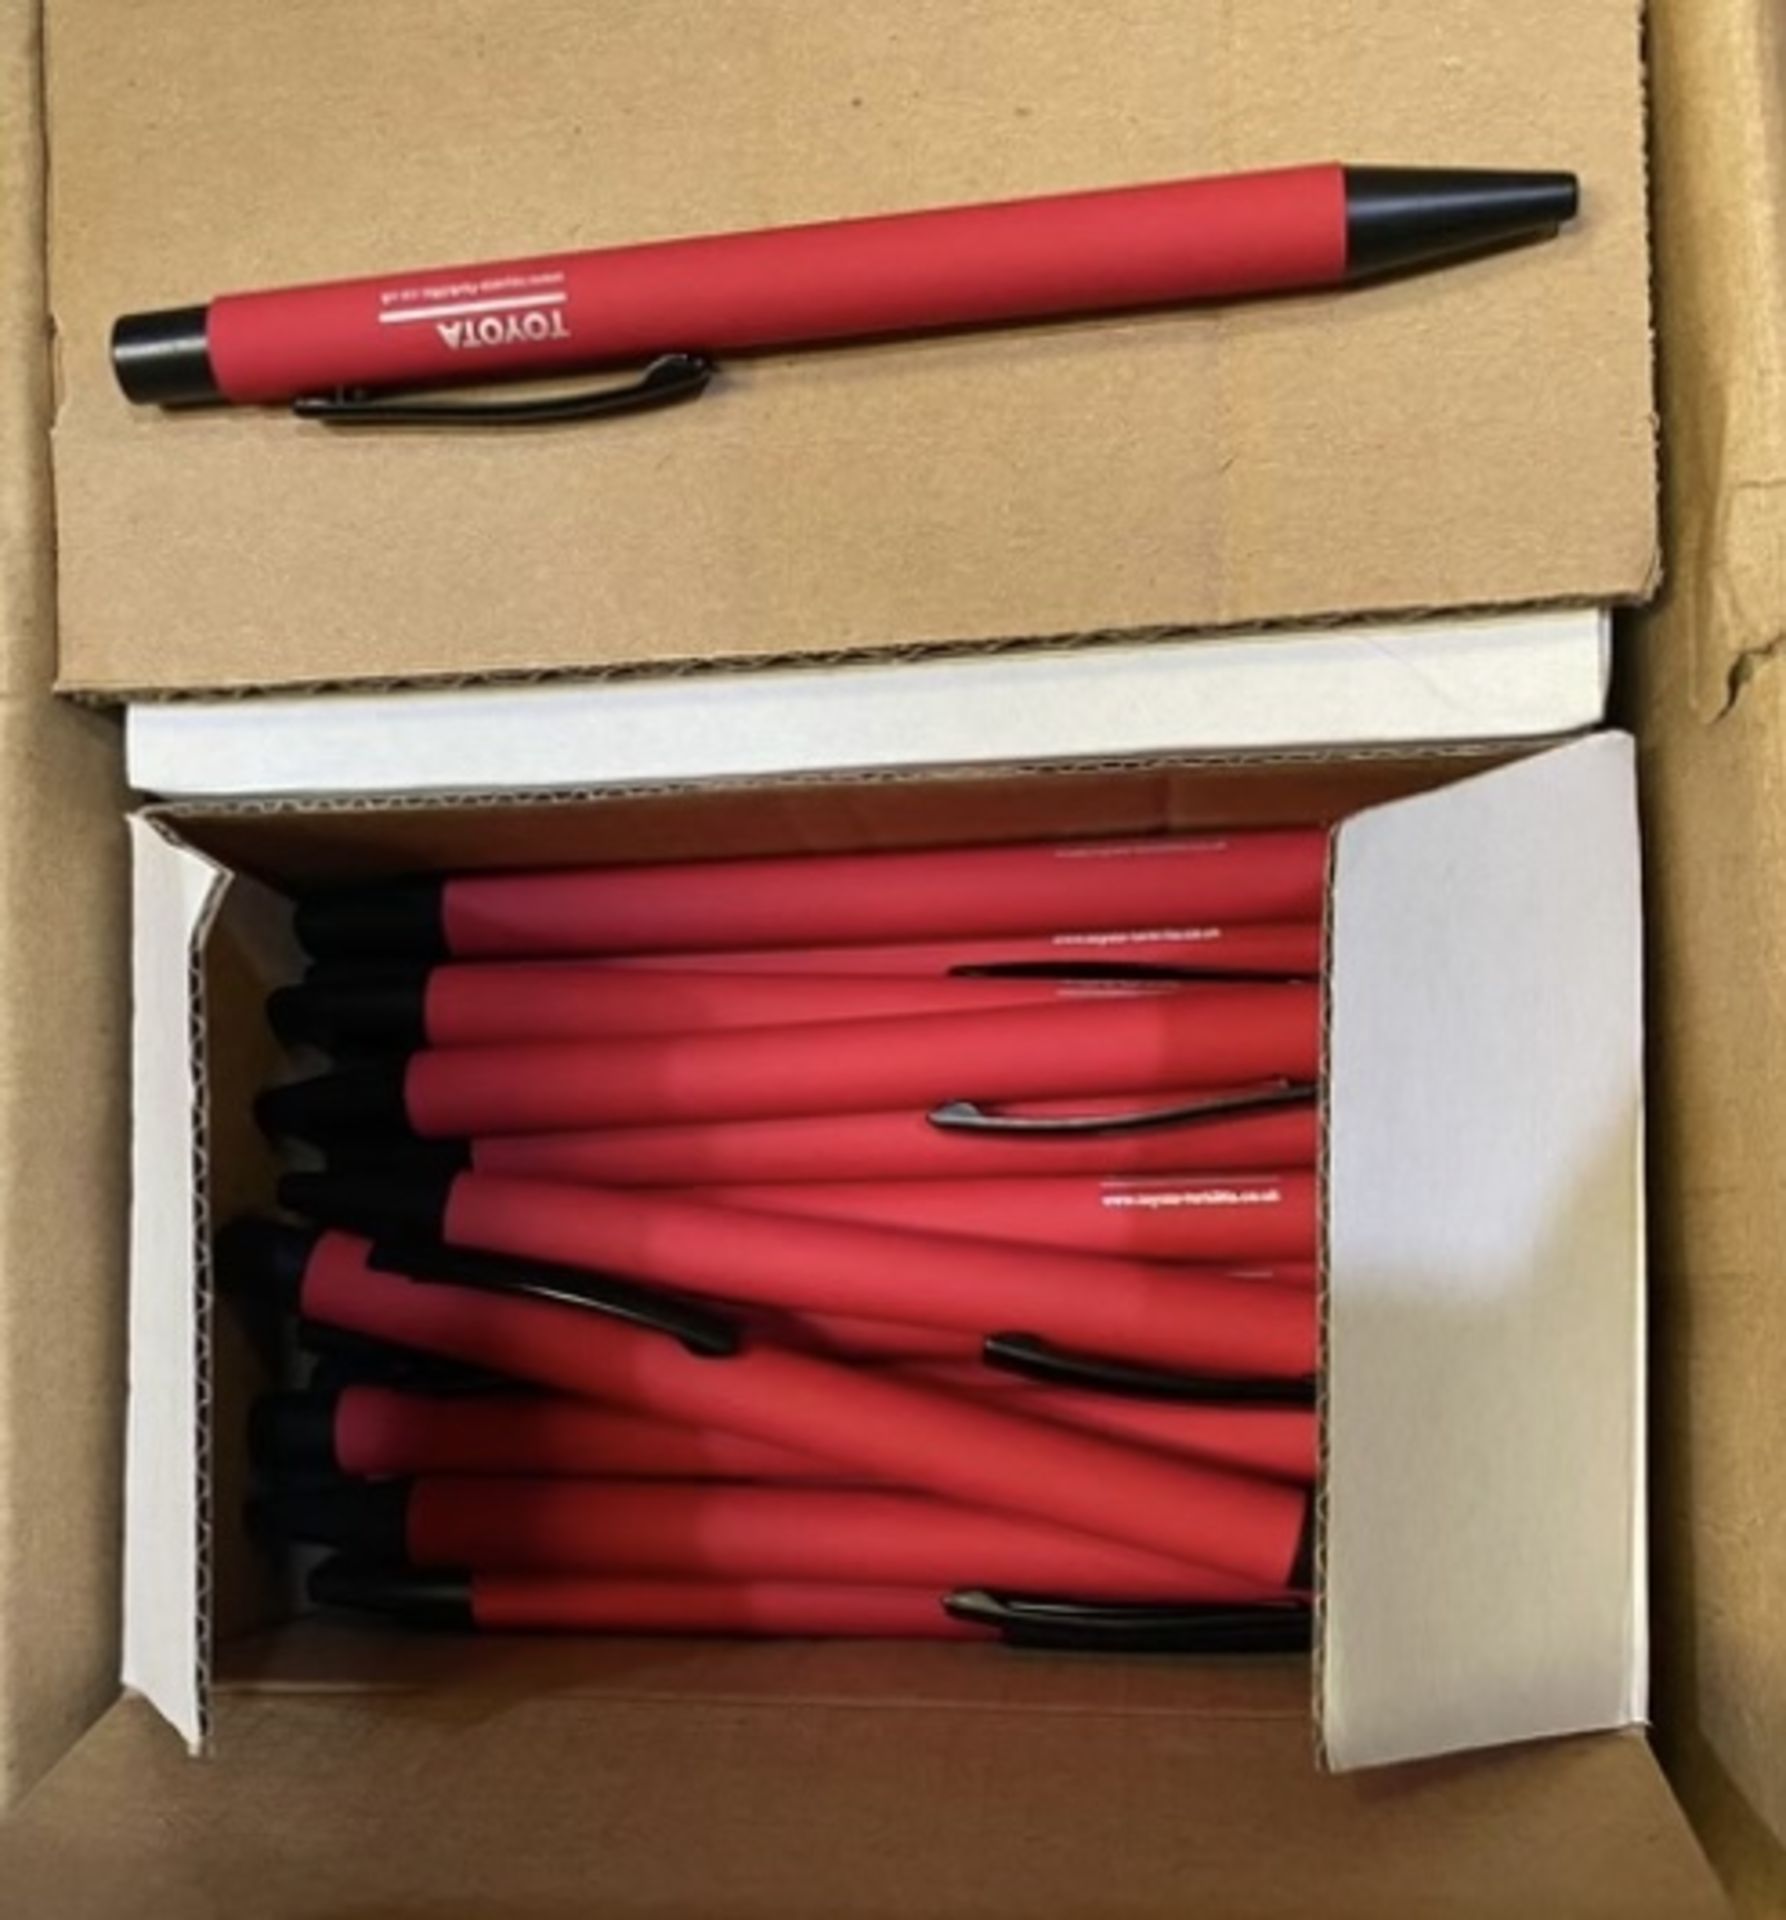 50 x Toyota Pens